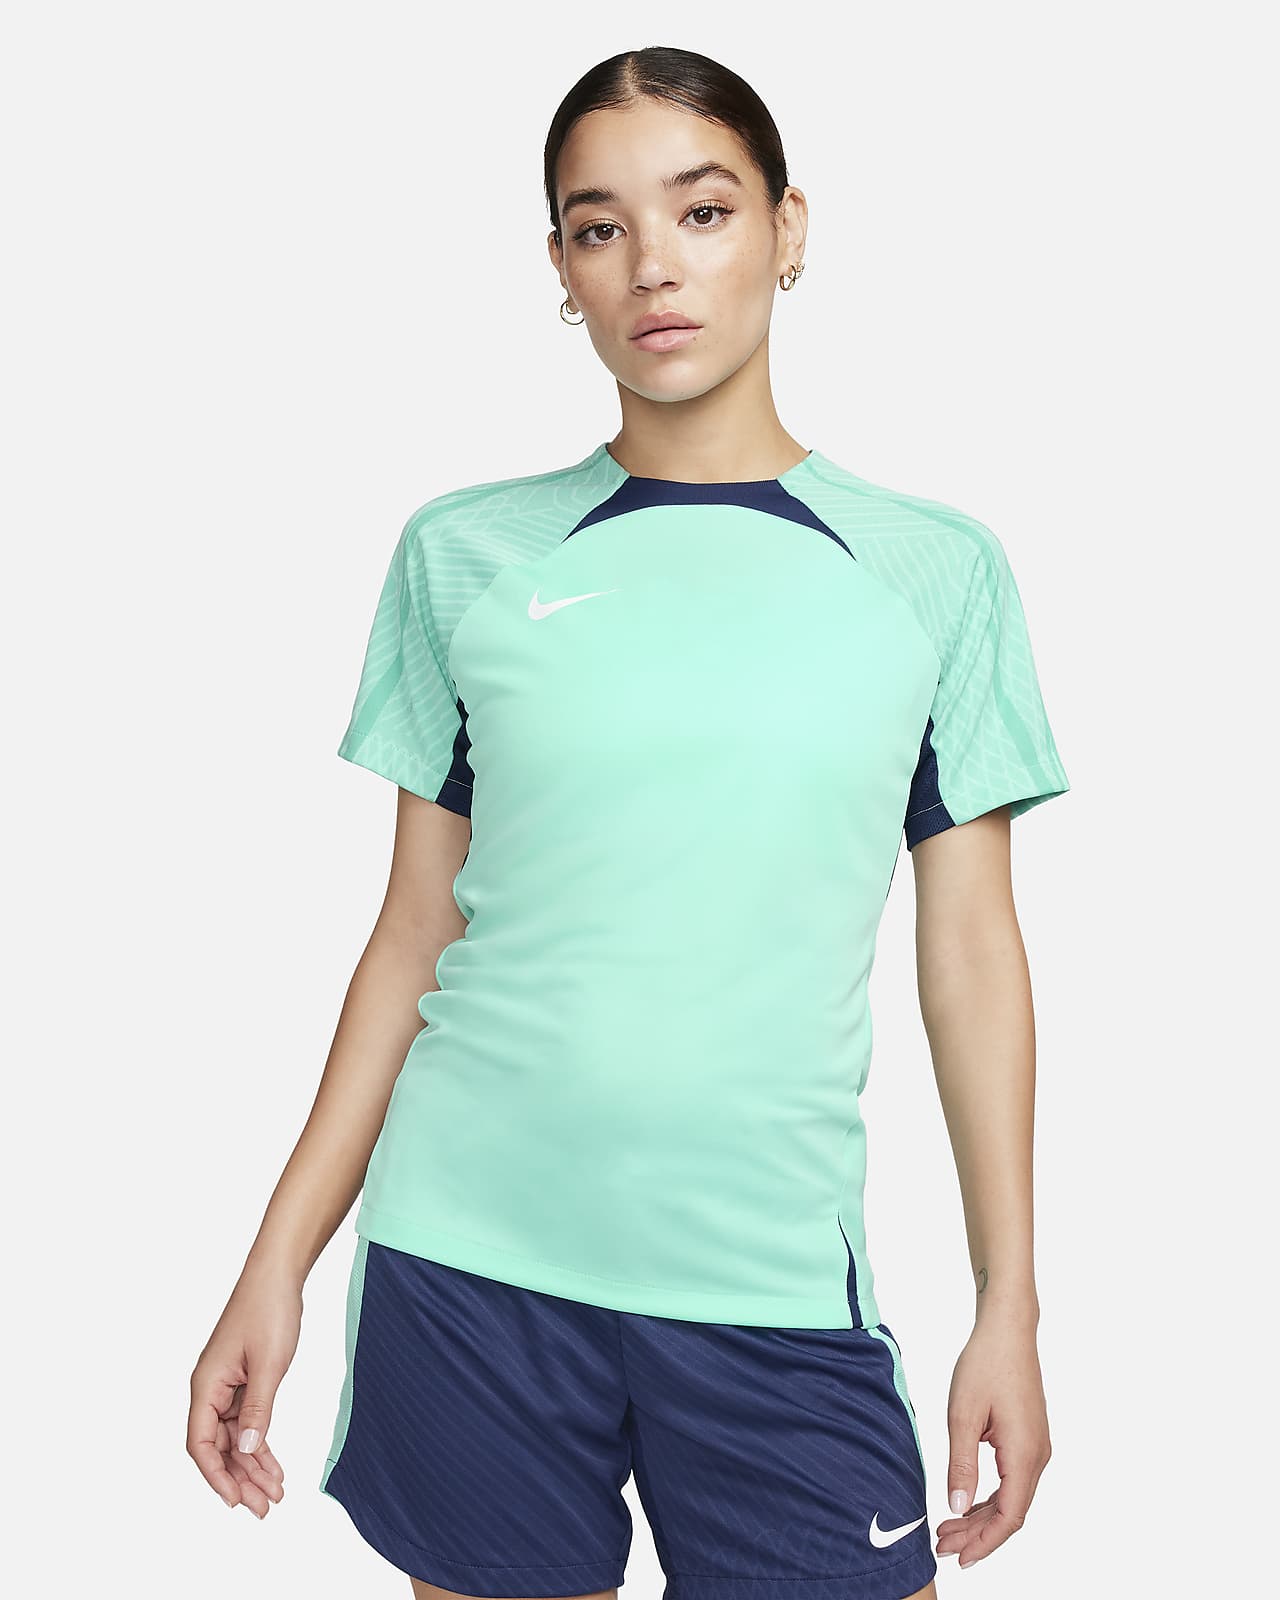 Nike Dri-FIT Strike Women's Short-Sleeve Top.